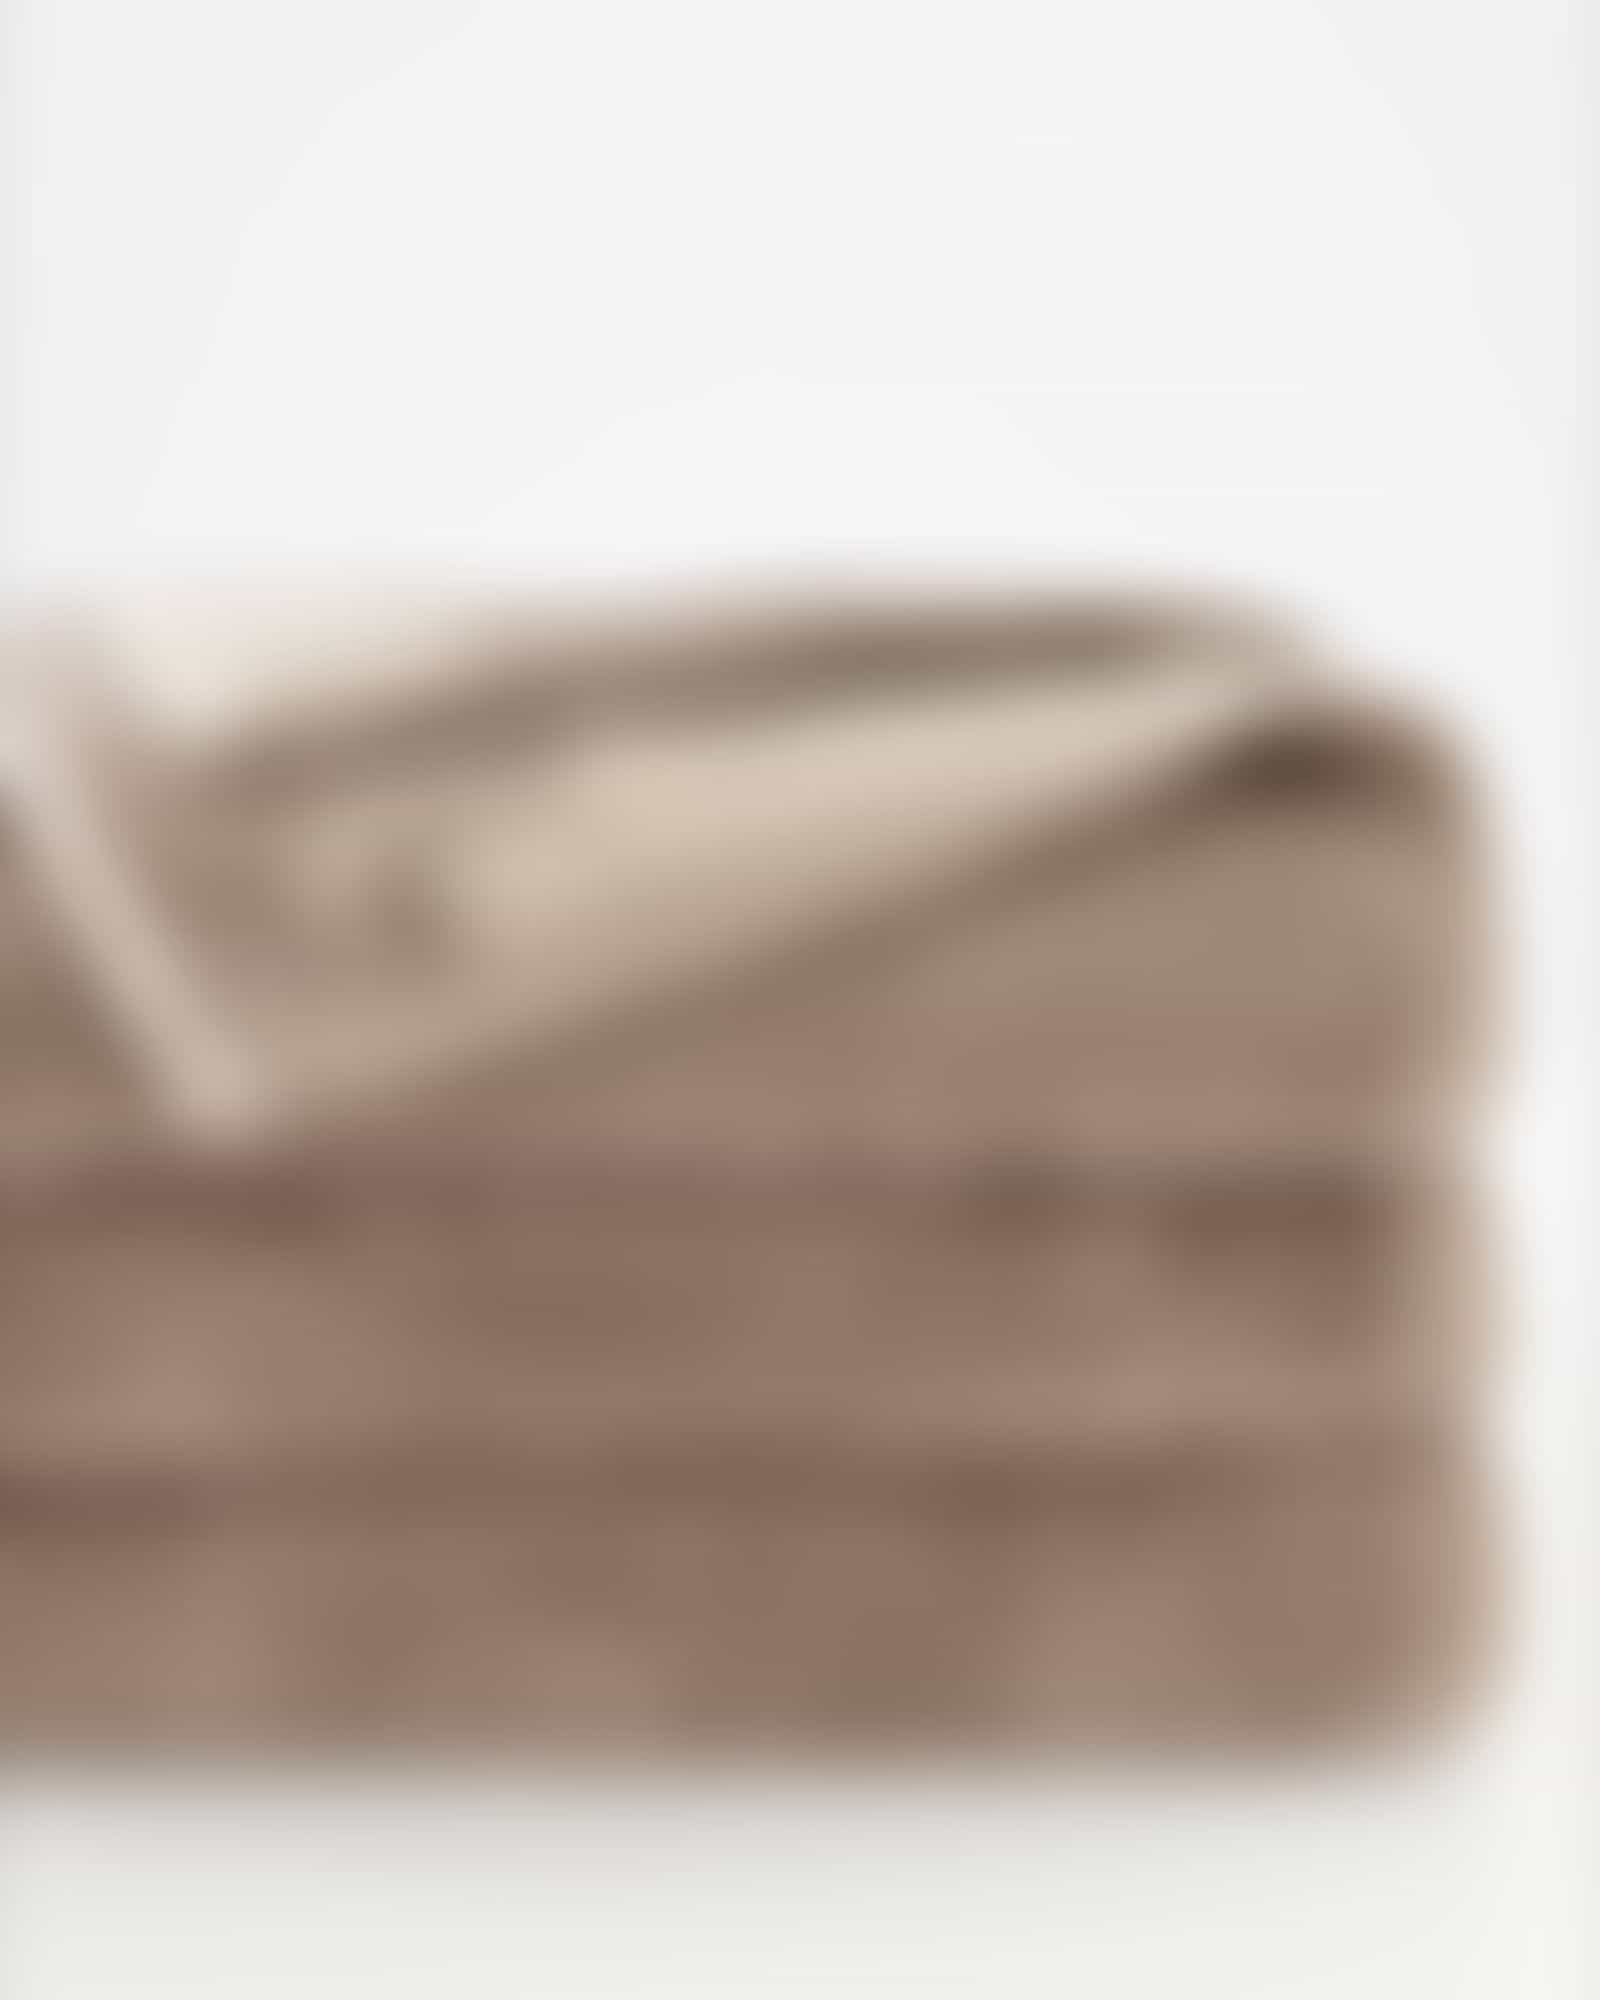 JOOP Tone Doubleface 1689 - Farbe: Sand - 37 - Handtuch 50x100 cm Detailbild 2